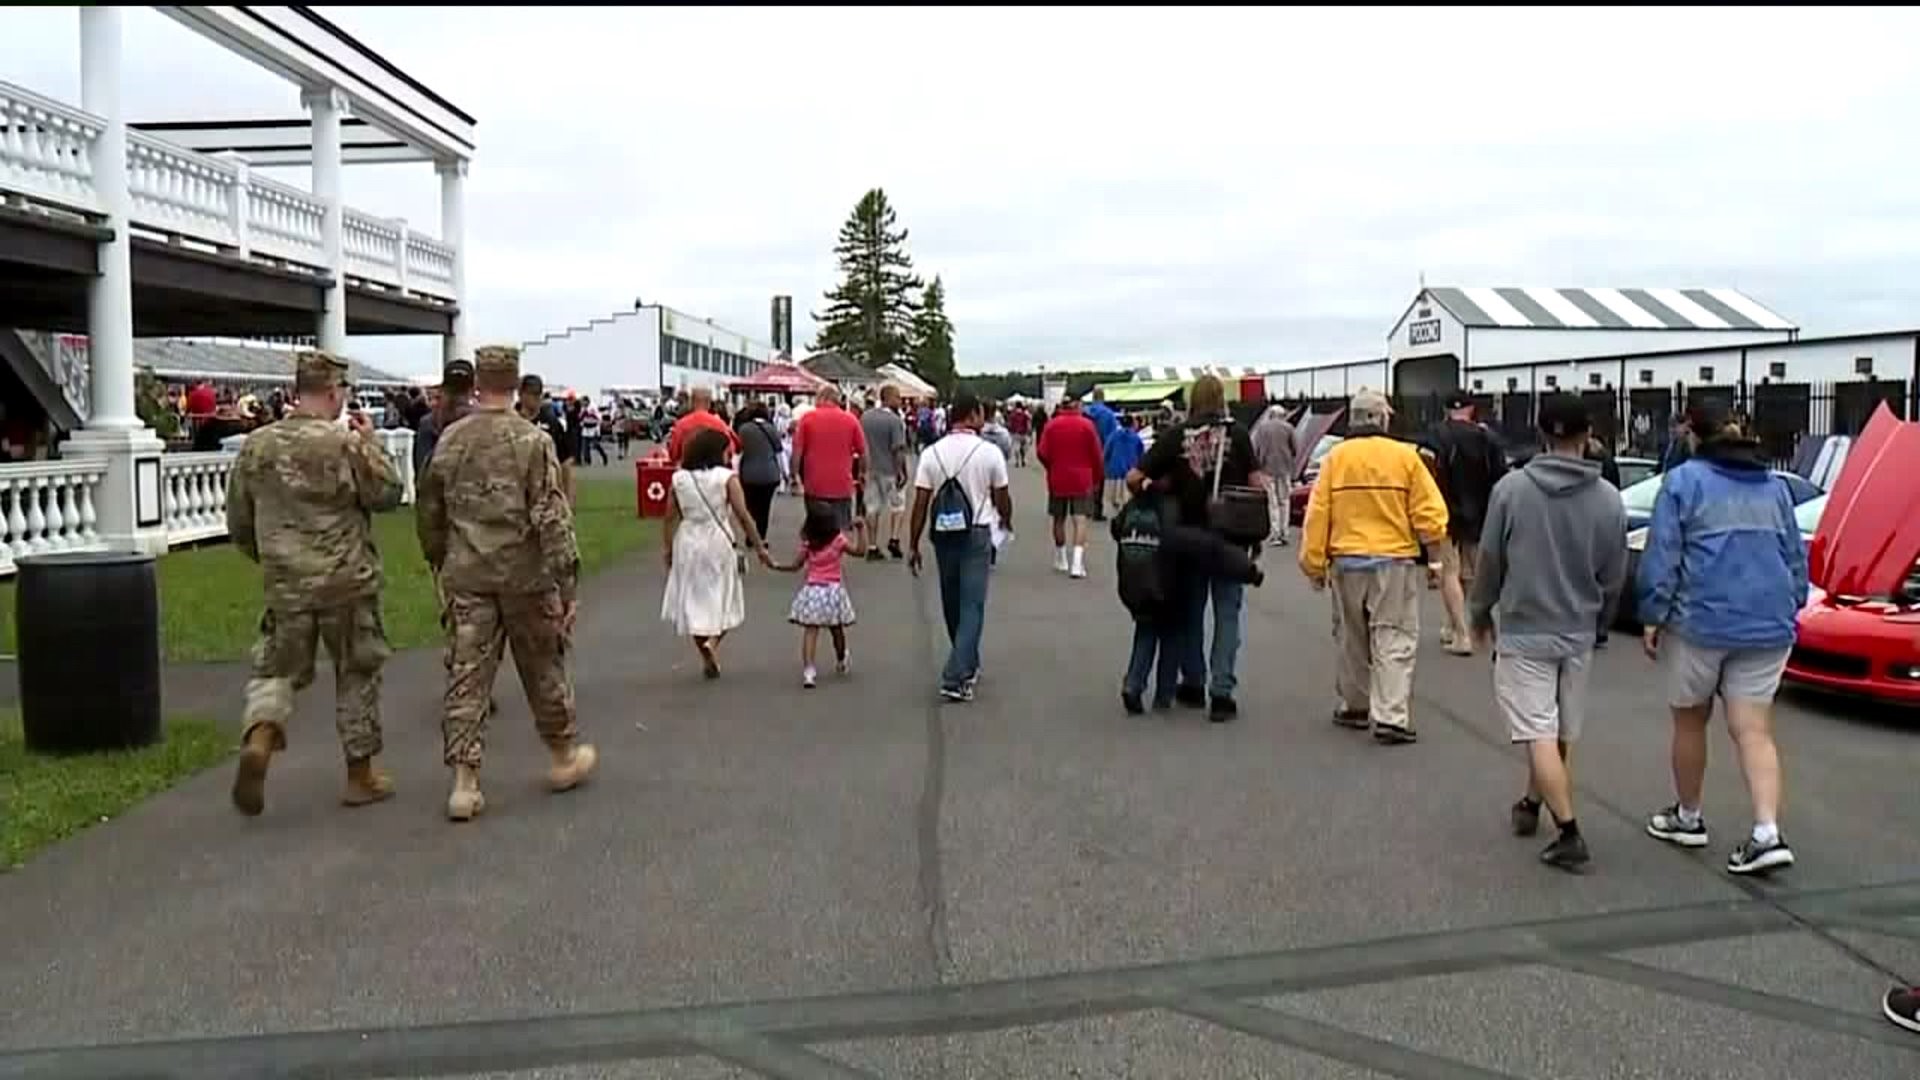 IndyCar Race Draws Thousands of Fans to the Poconos